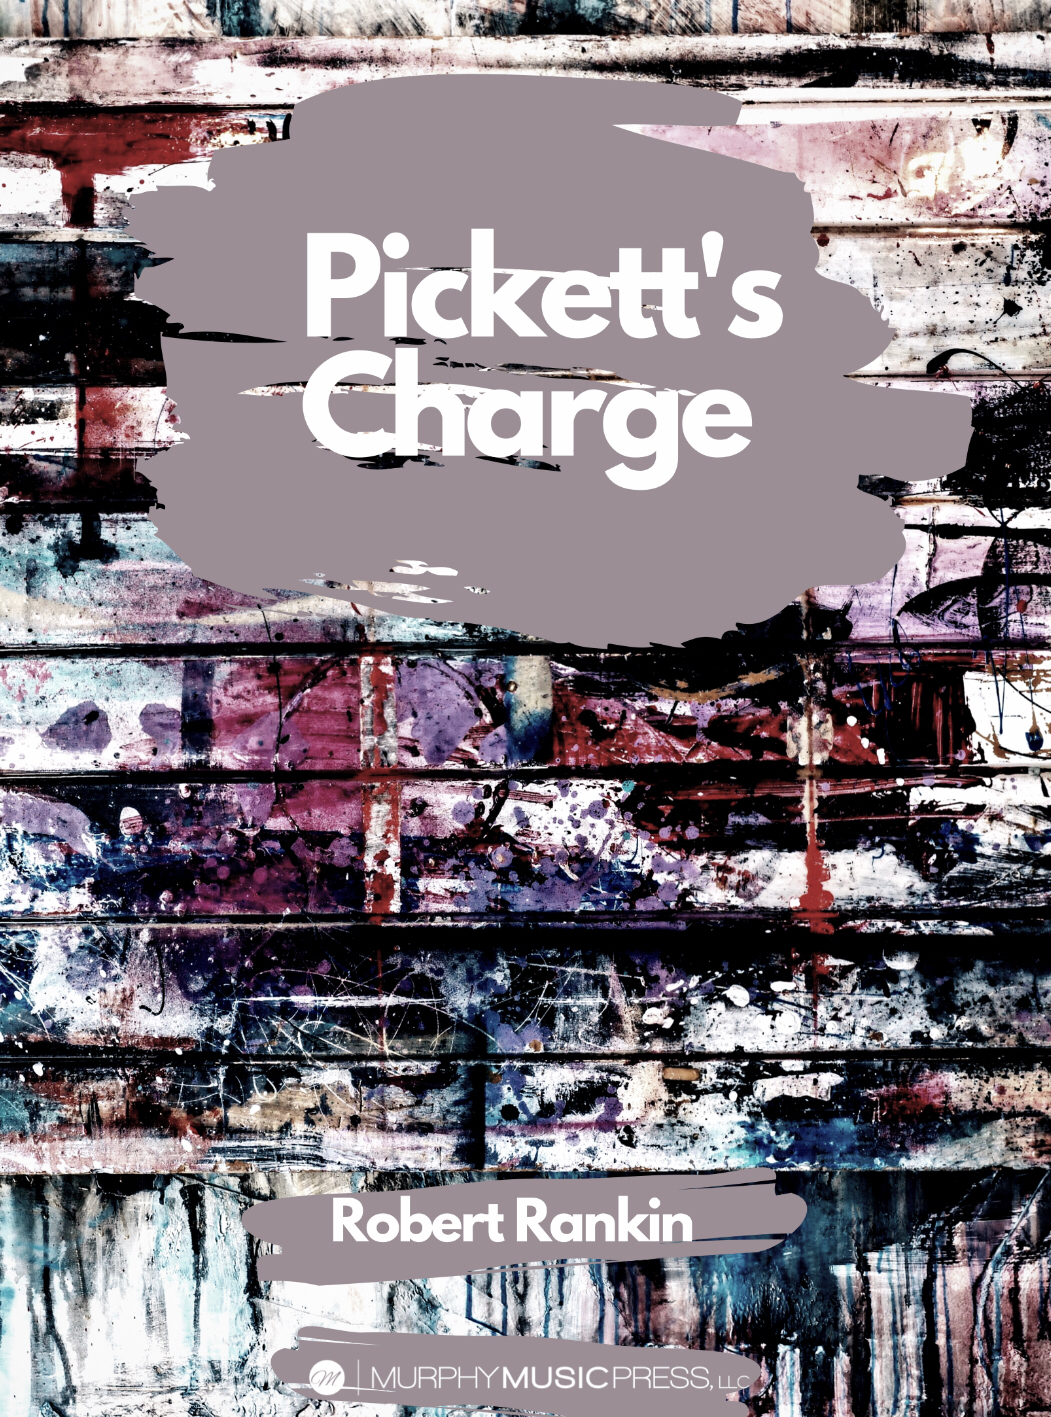 Pickett's Charge by Robert Rankin